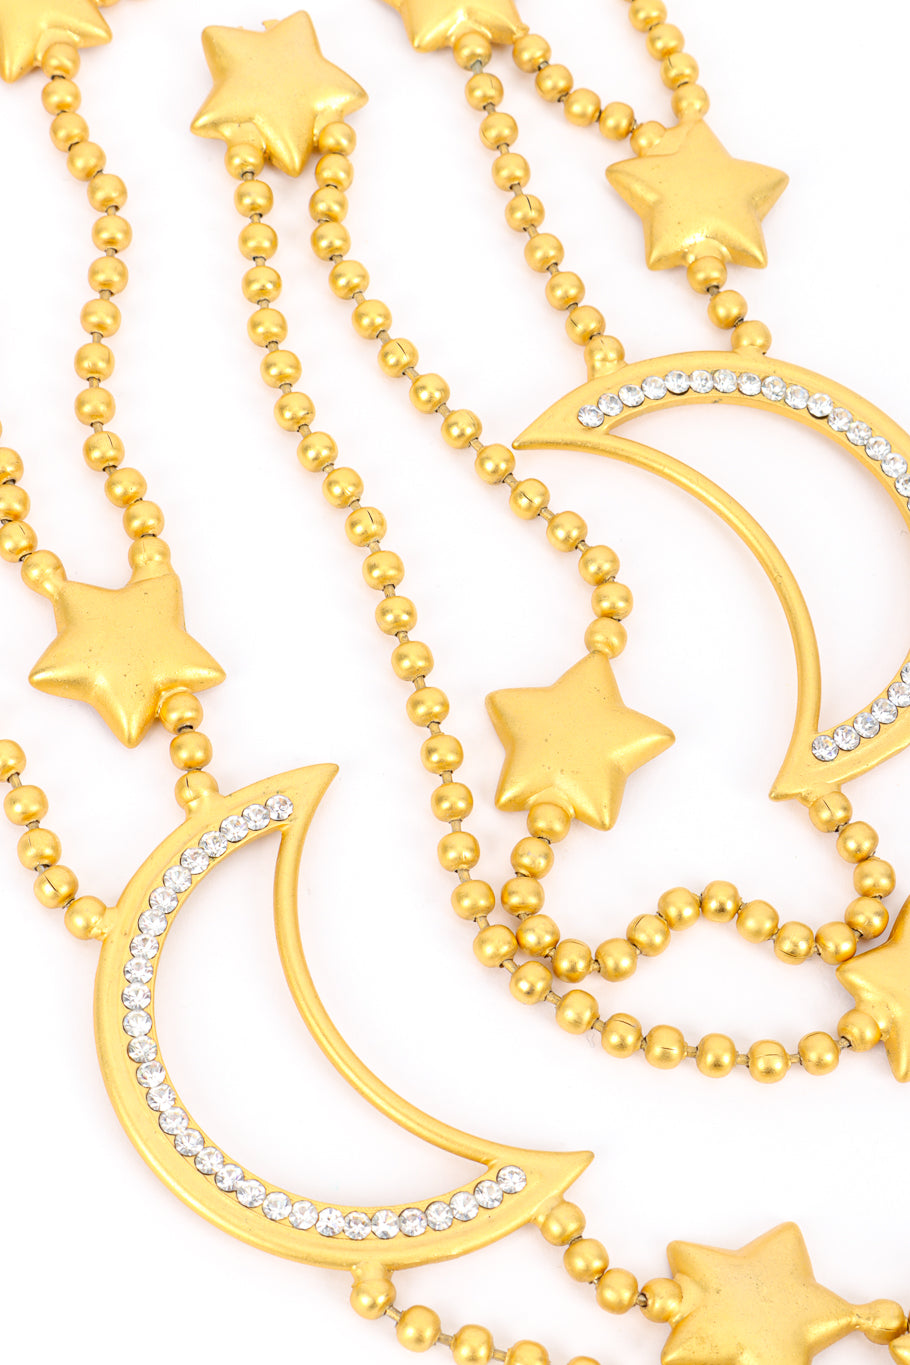 Vintage Ugo Correani Star and Crescent Moon Necklace front charm closeup @recess la